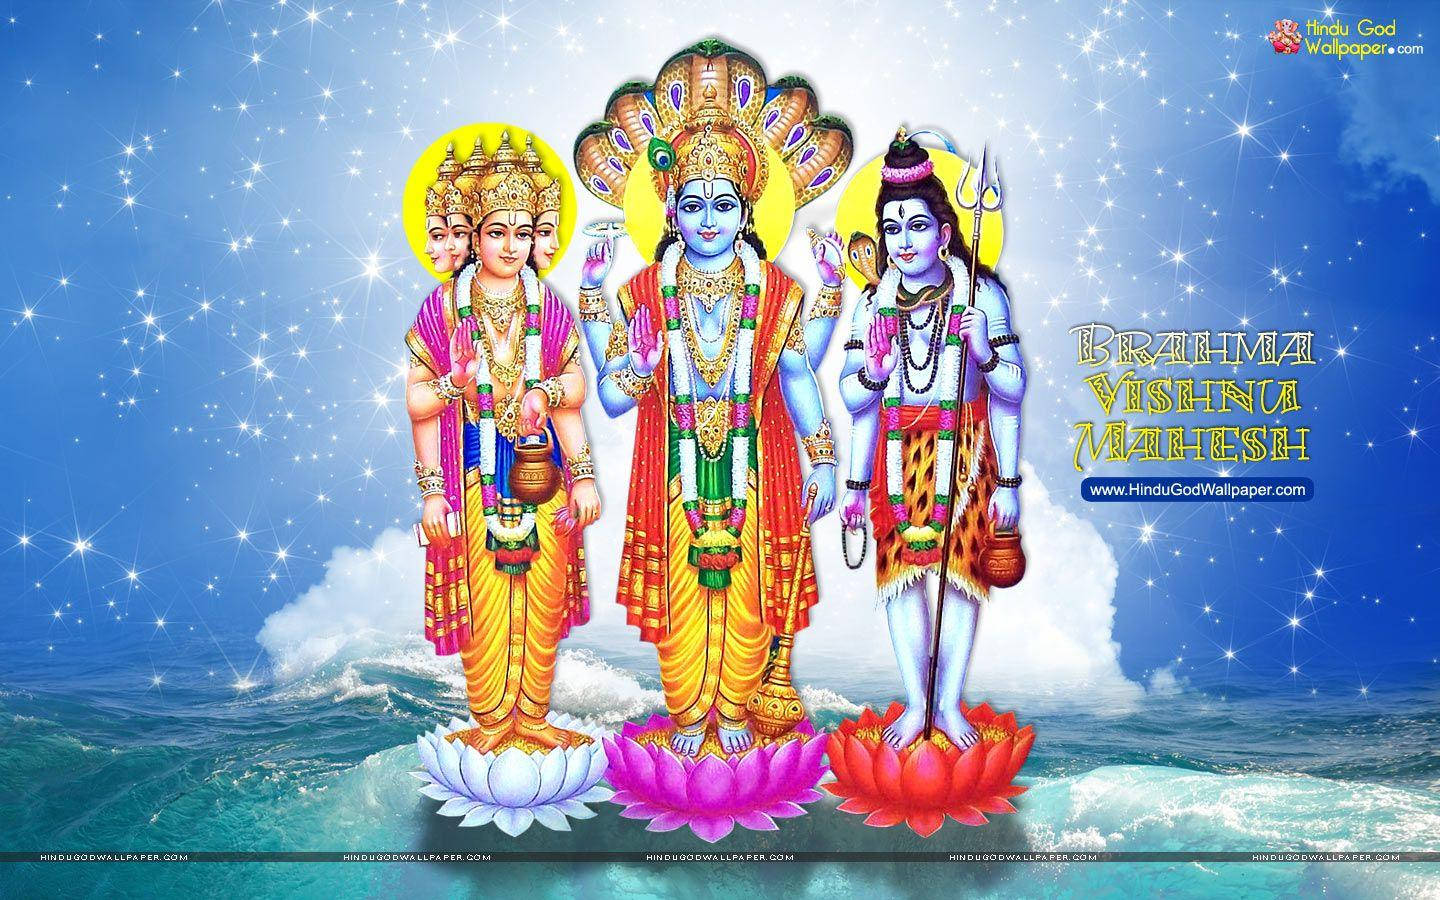 Lord Vishnu In Between Two Goddesses Background